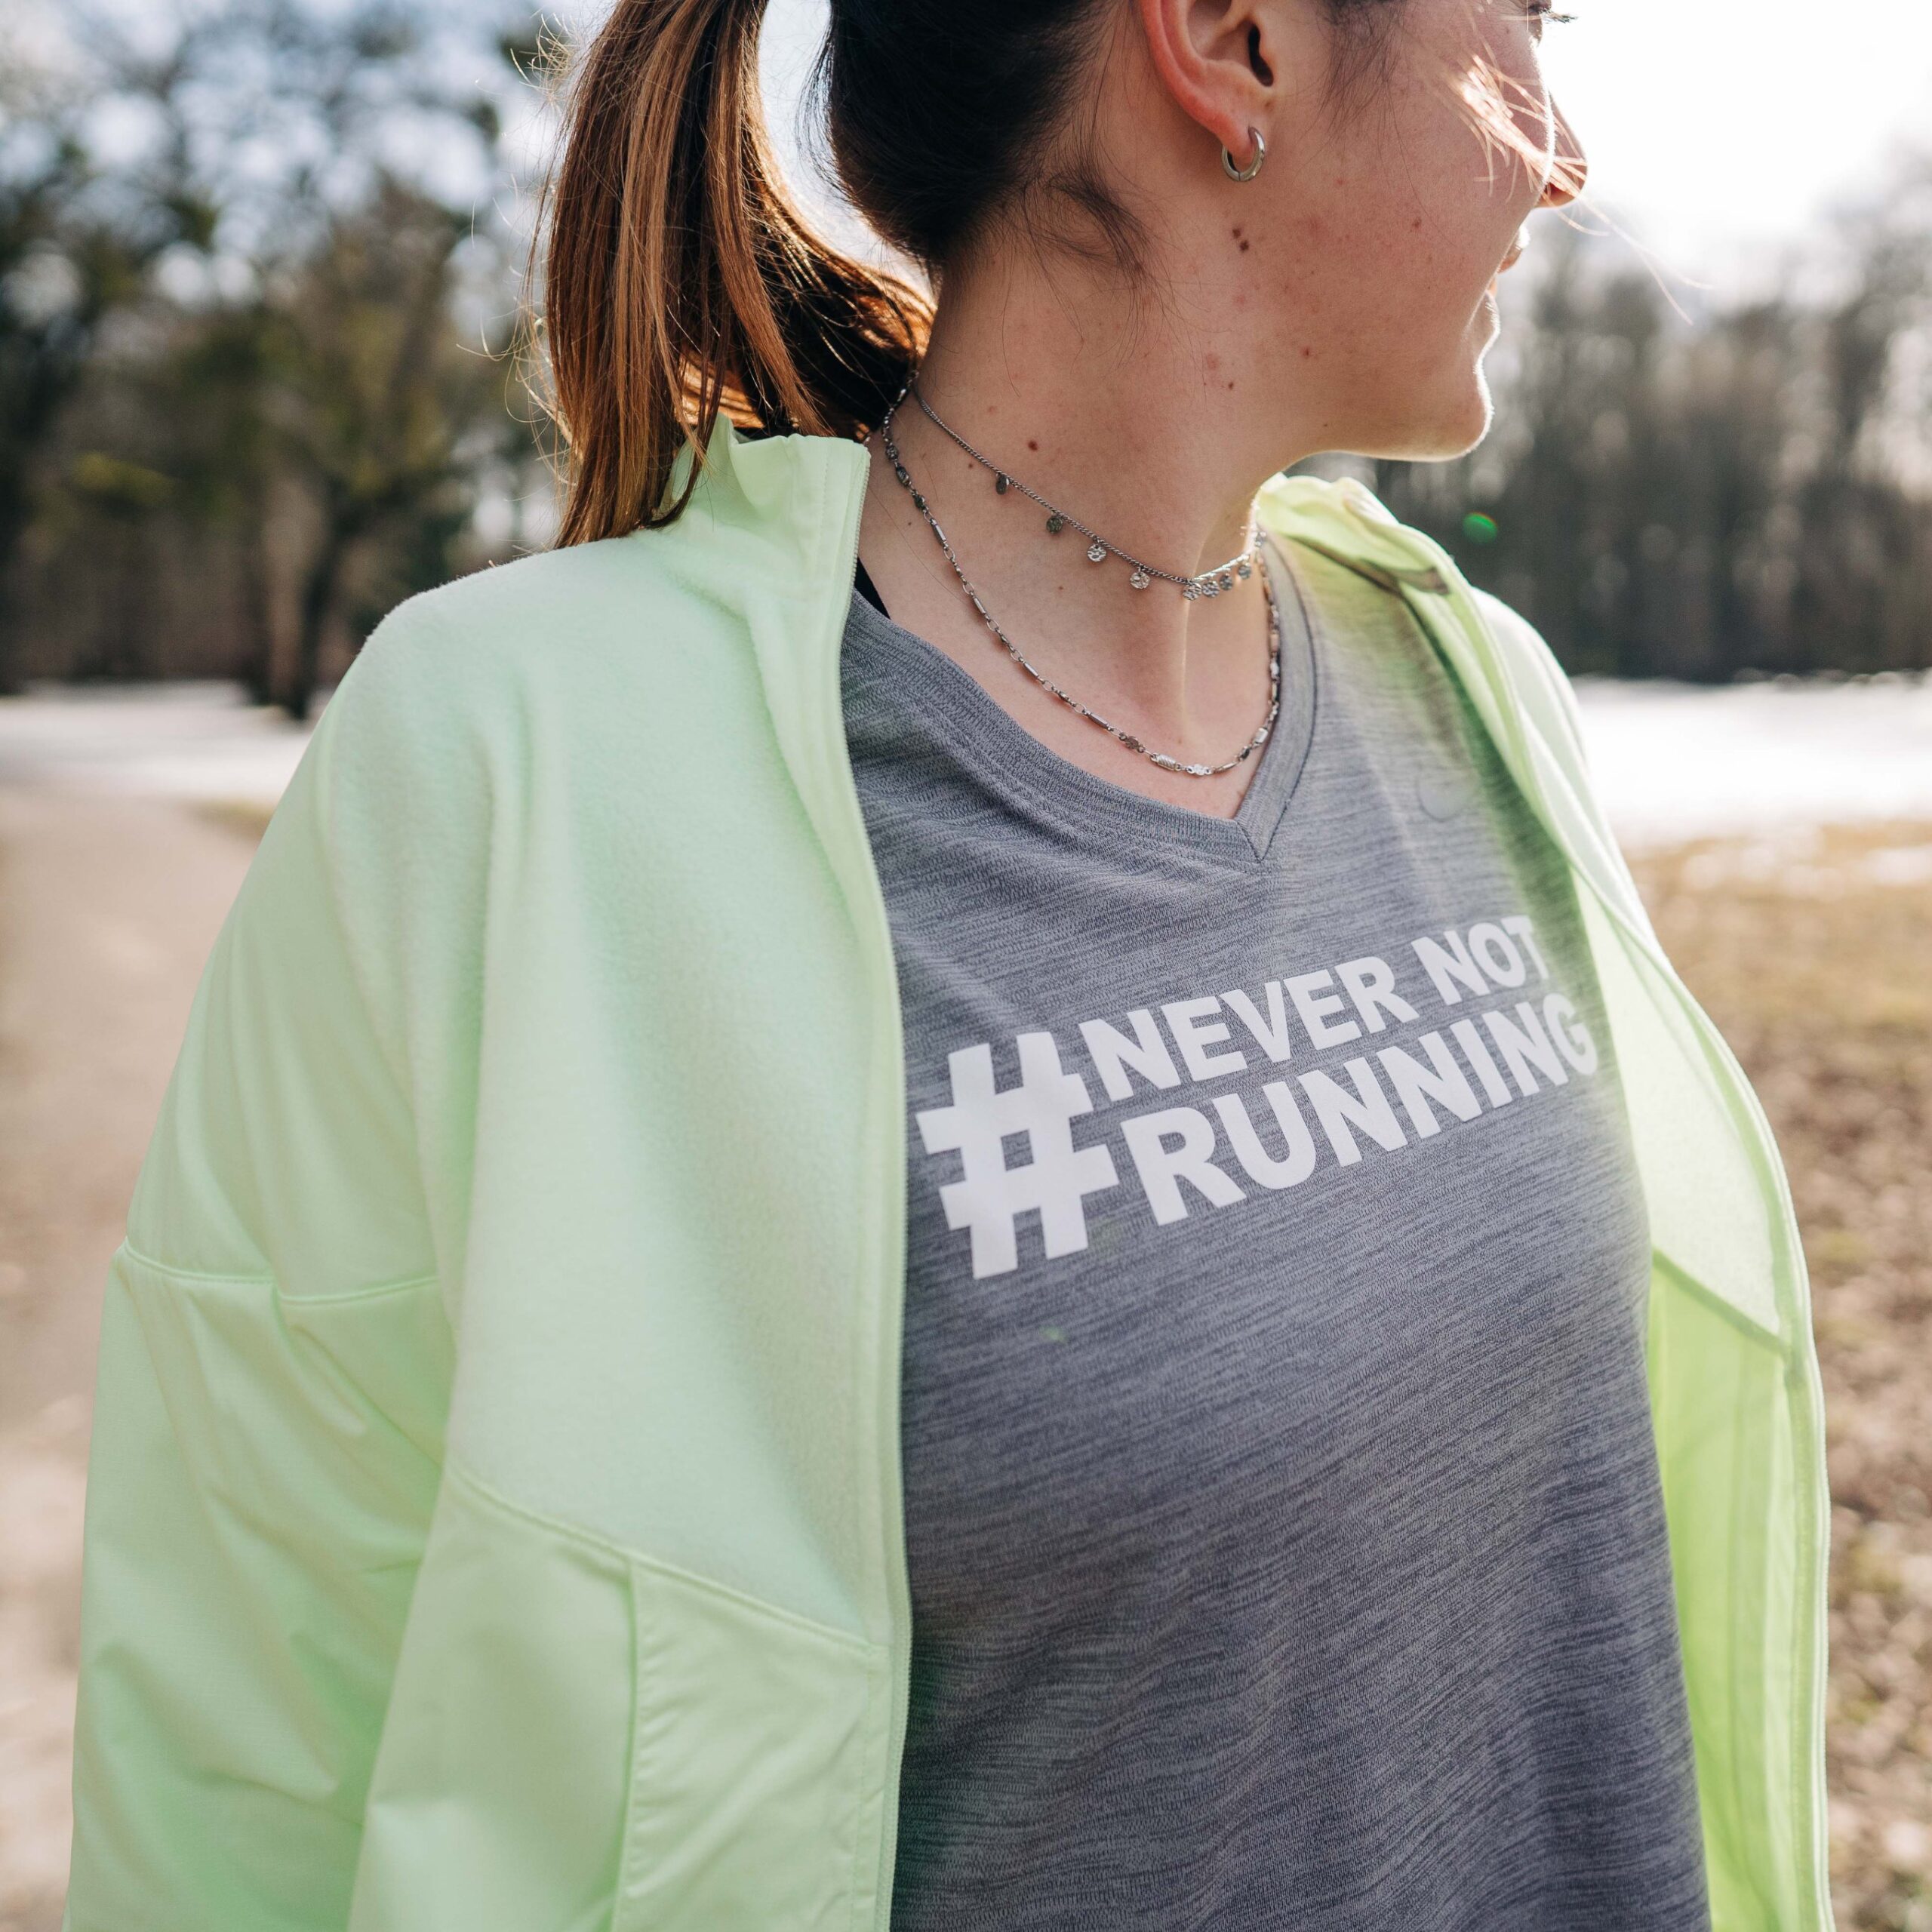 Never Not Running